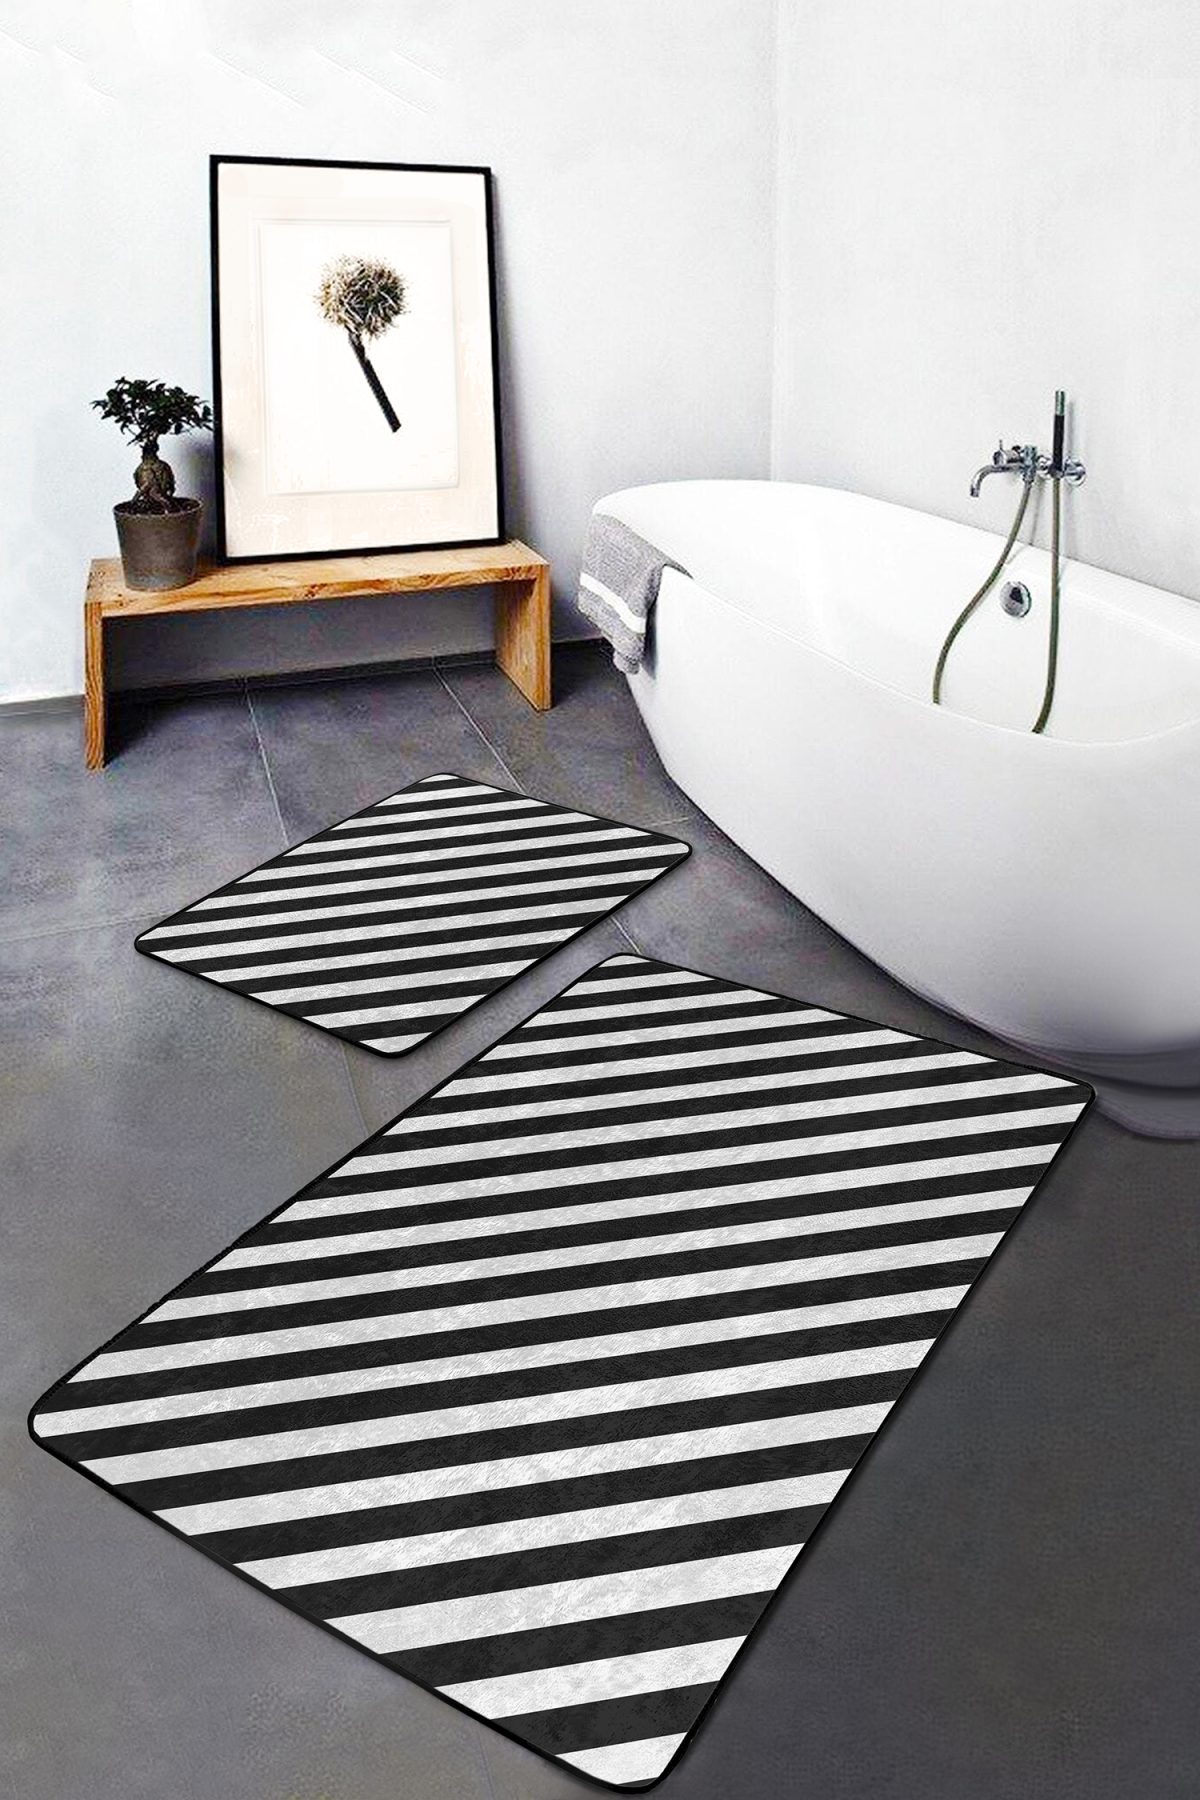 Siyah Beyaz Çapraz Çizgi Tasarımlı 2'li Kaymaz Tabanlı Banyo & Mutfak Paspas Takımı Realhomes